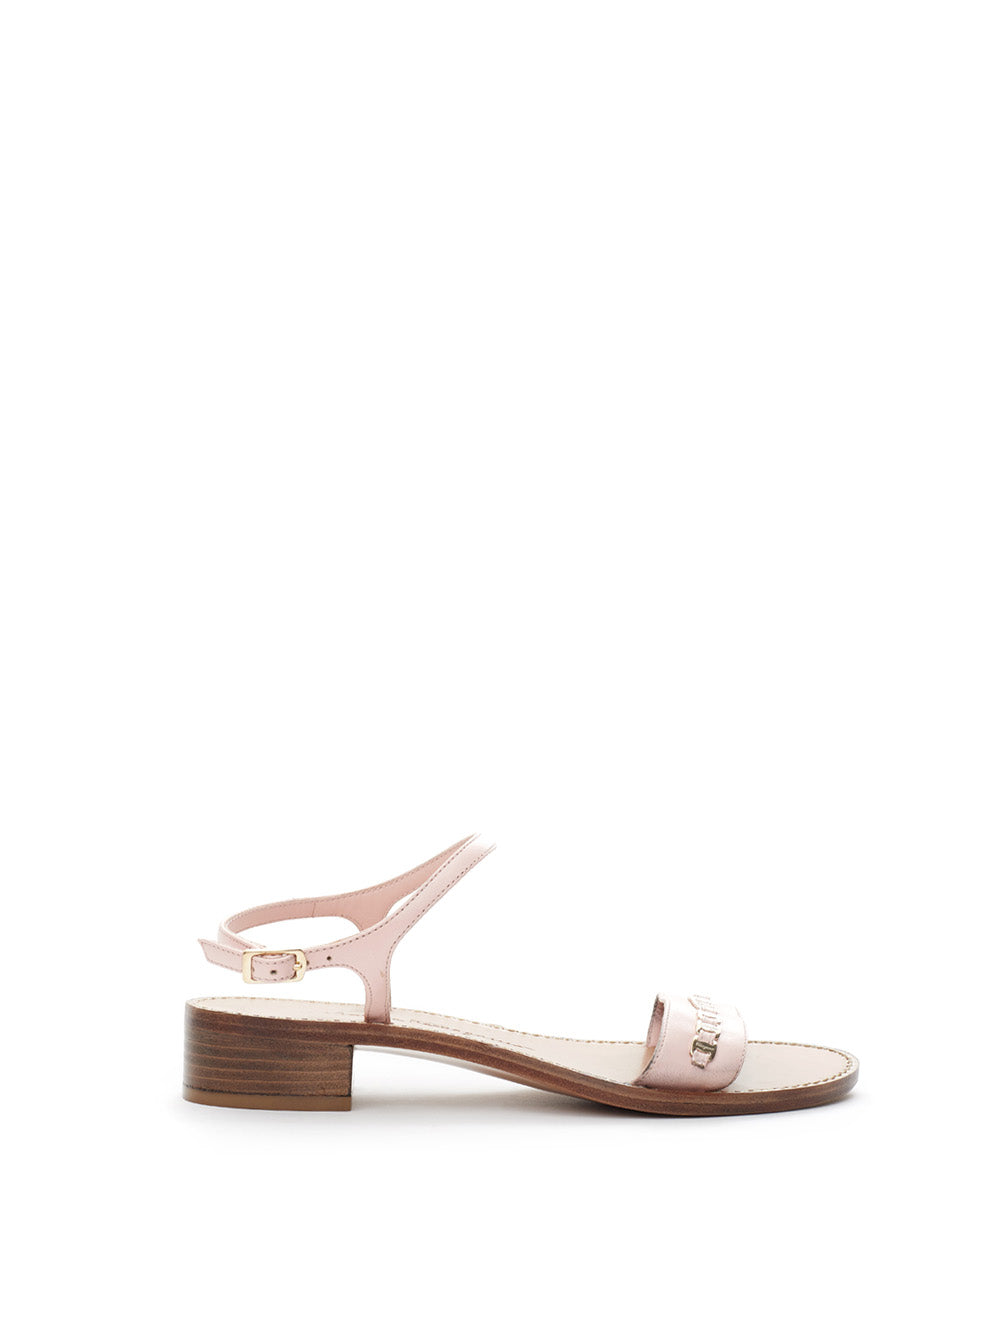 Salvatore Ferragamo Tremiti Pink Leather Sandals